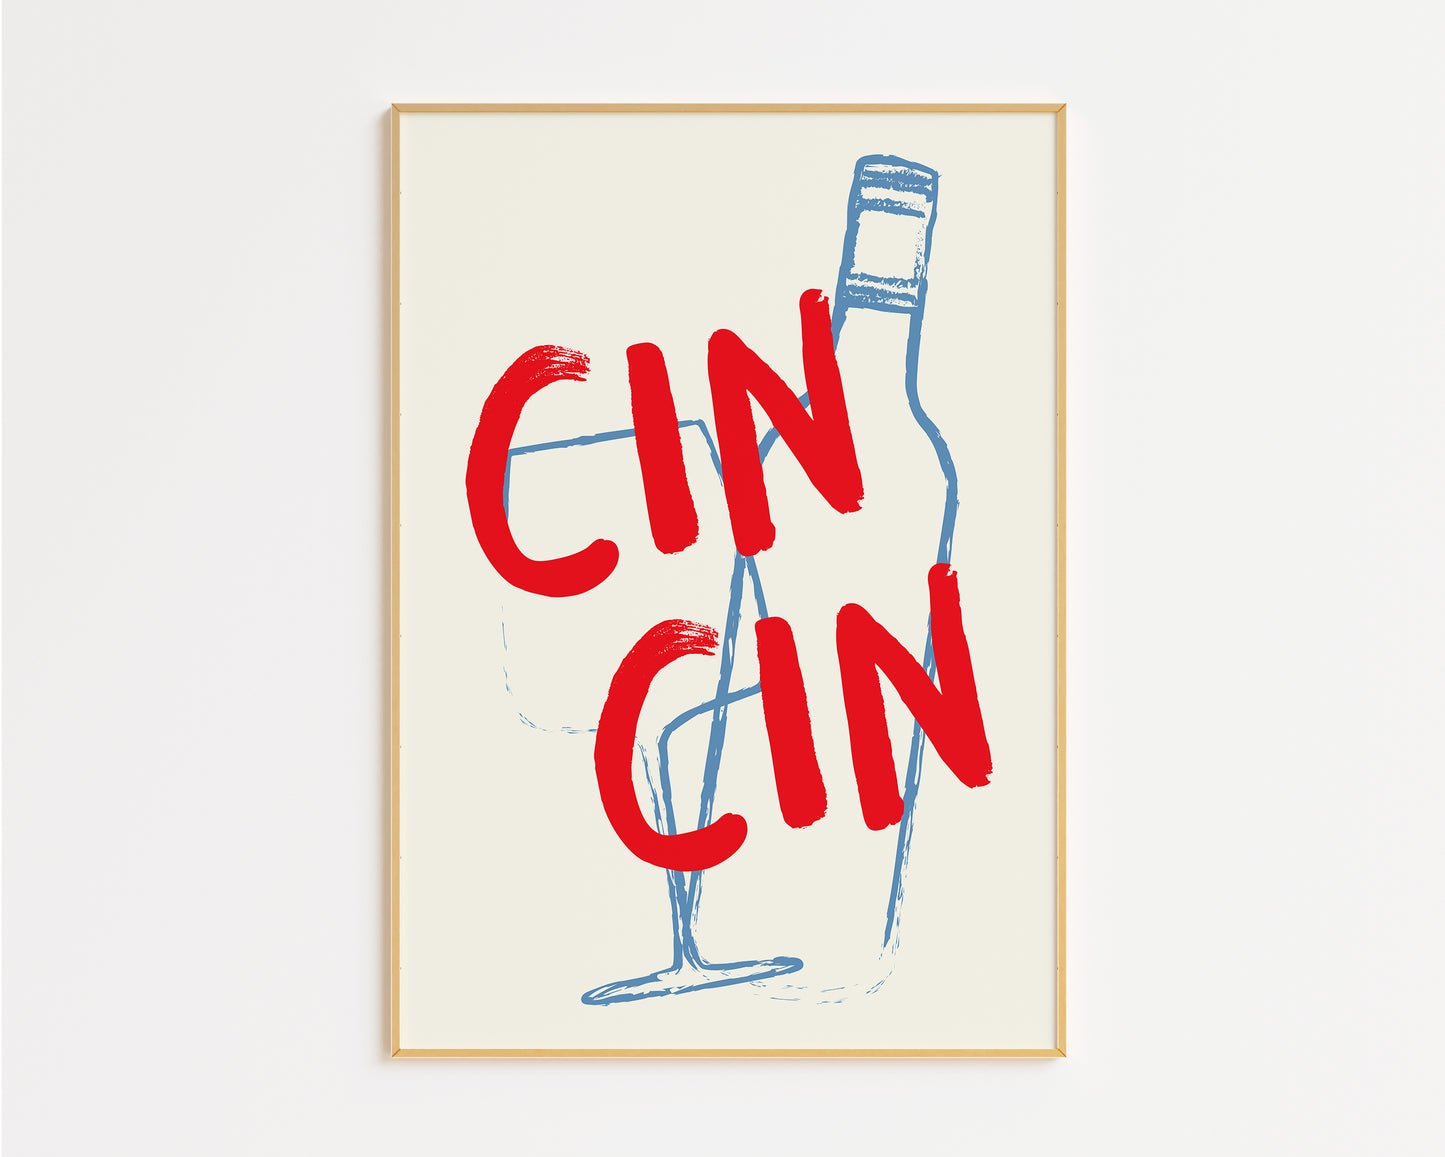 Cin Cin Illustrated Print